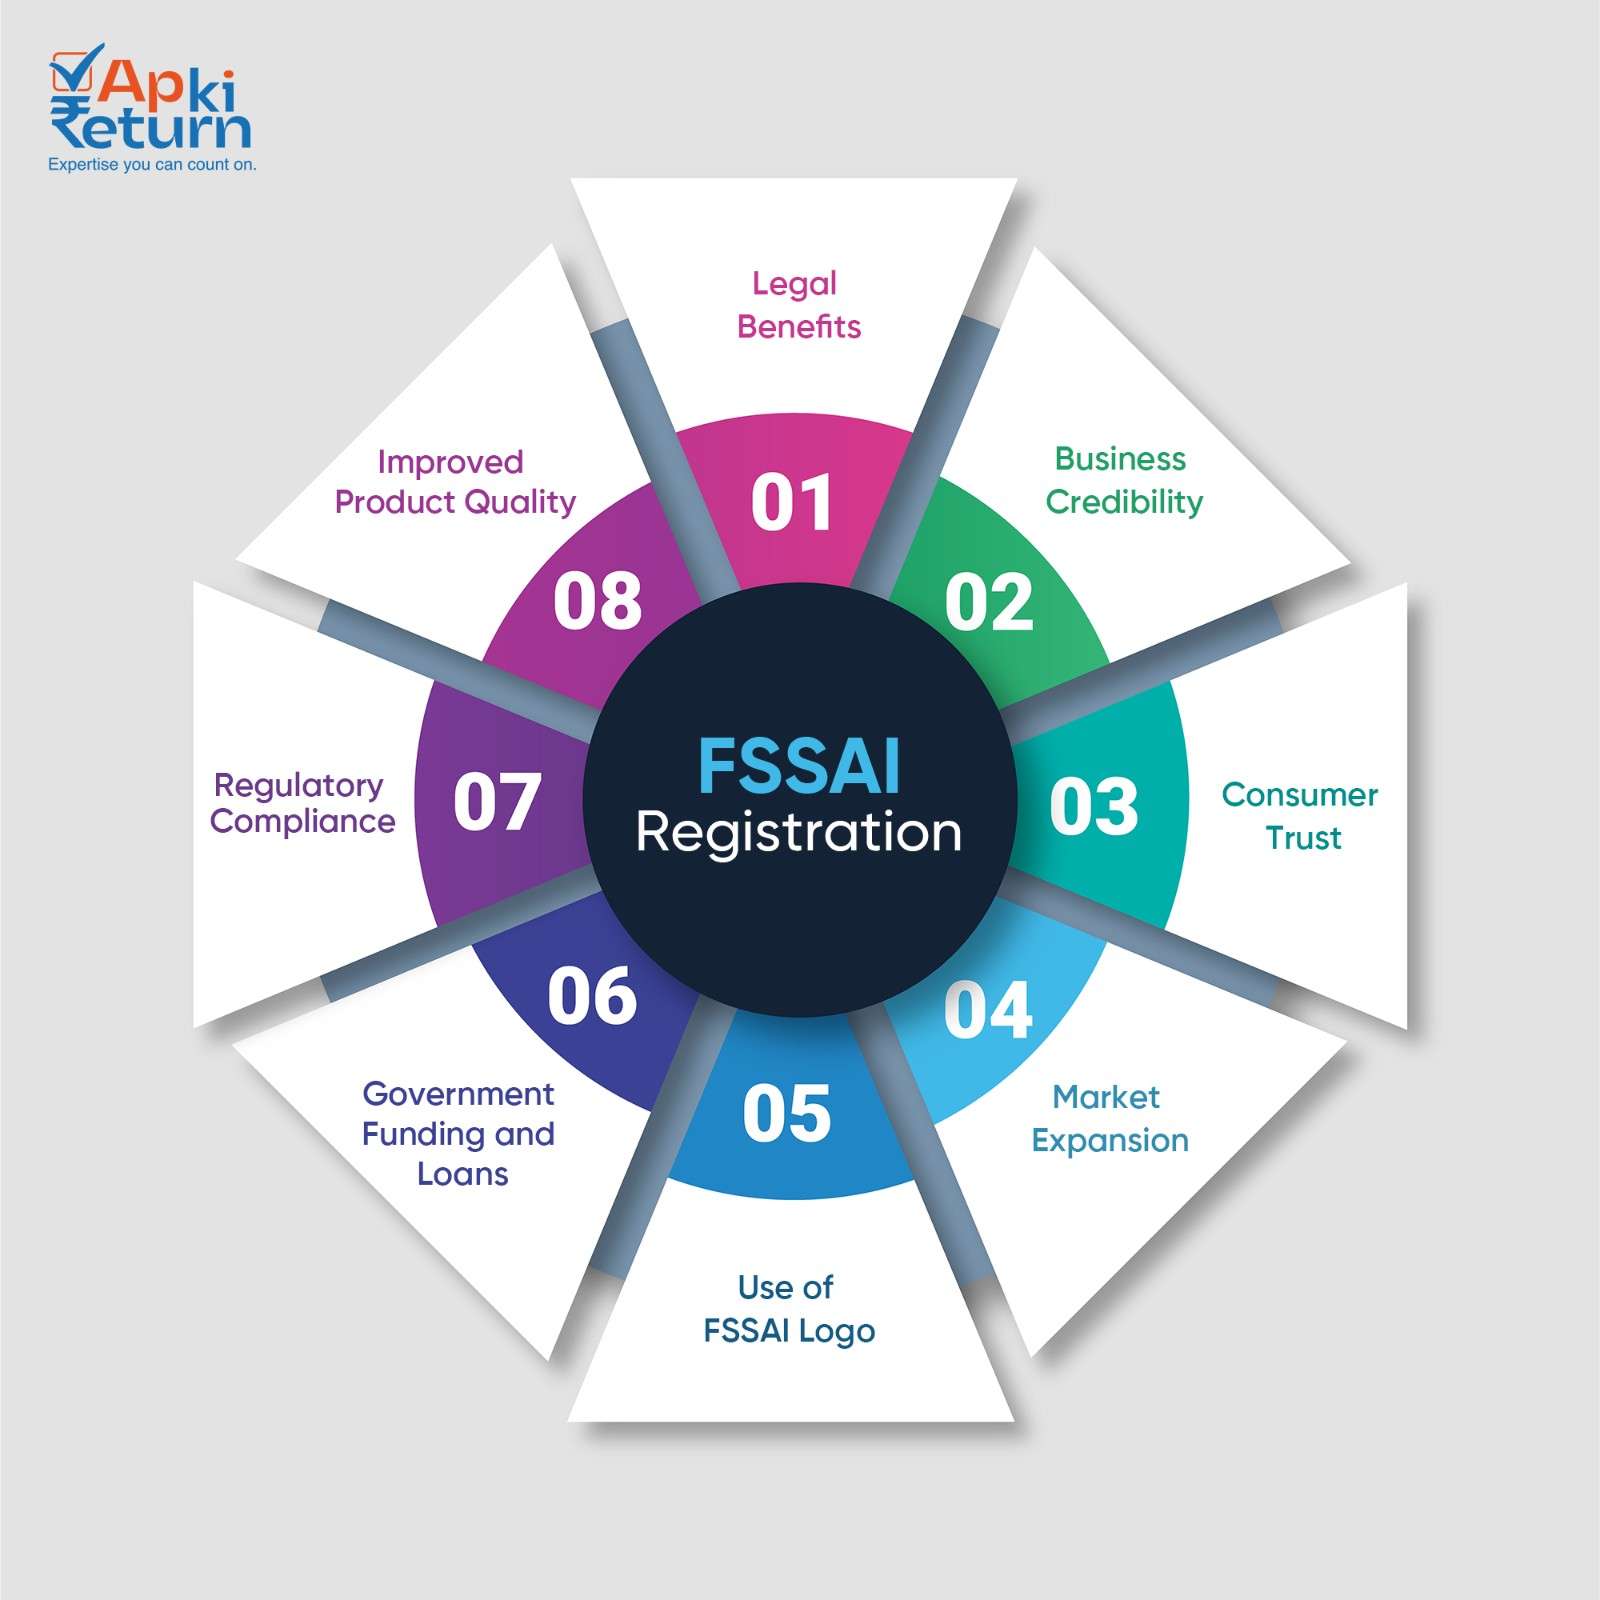 Advantages of FSSAI Registration